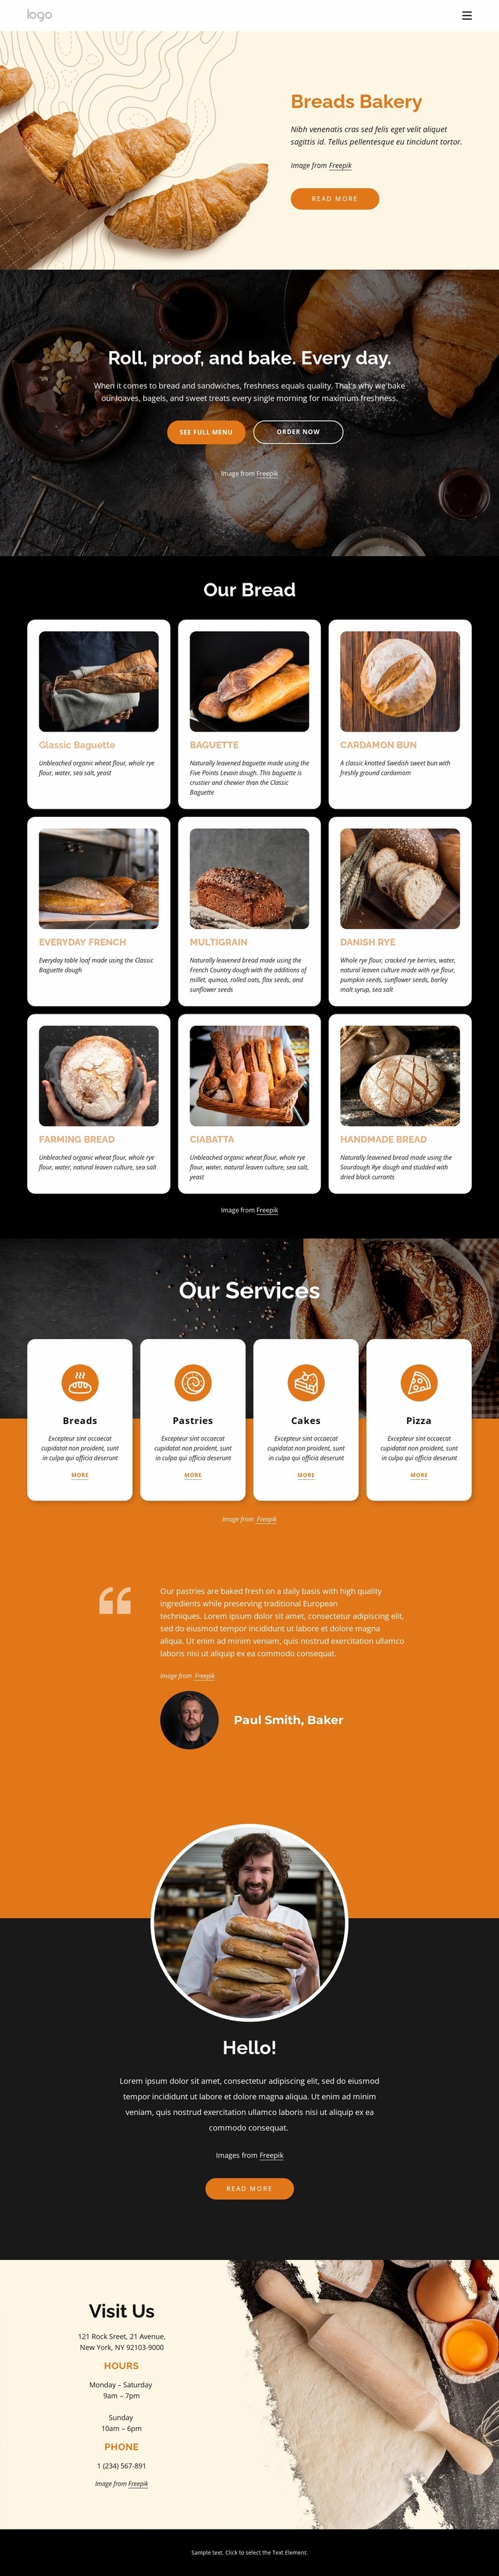 Classic baked goods Website Design